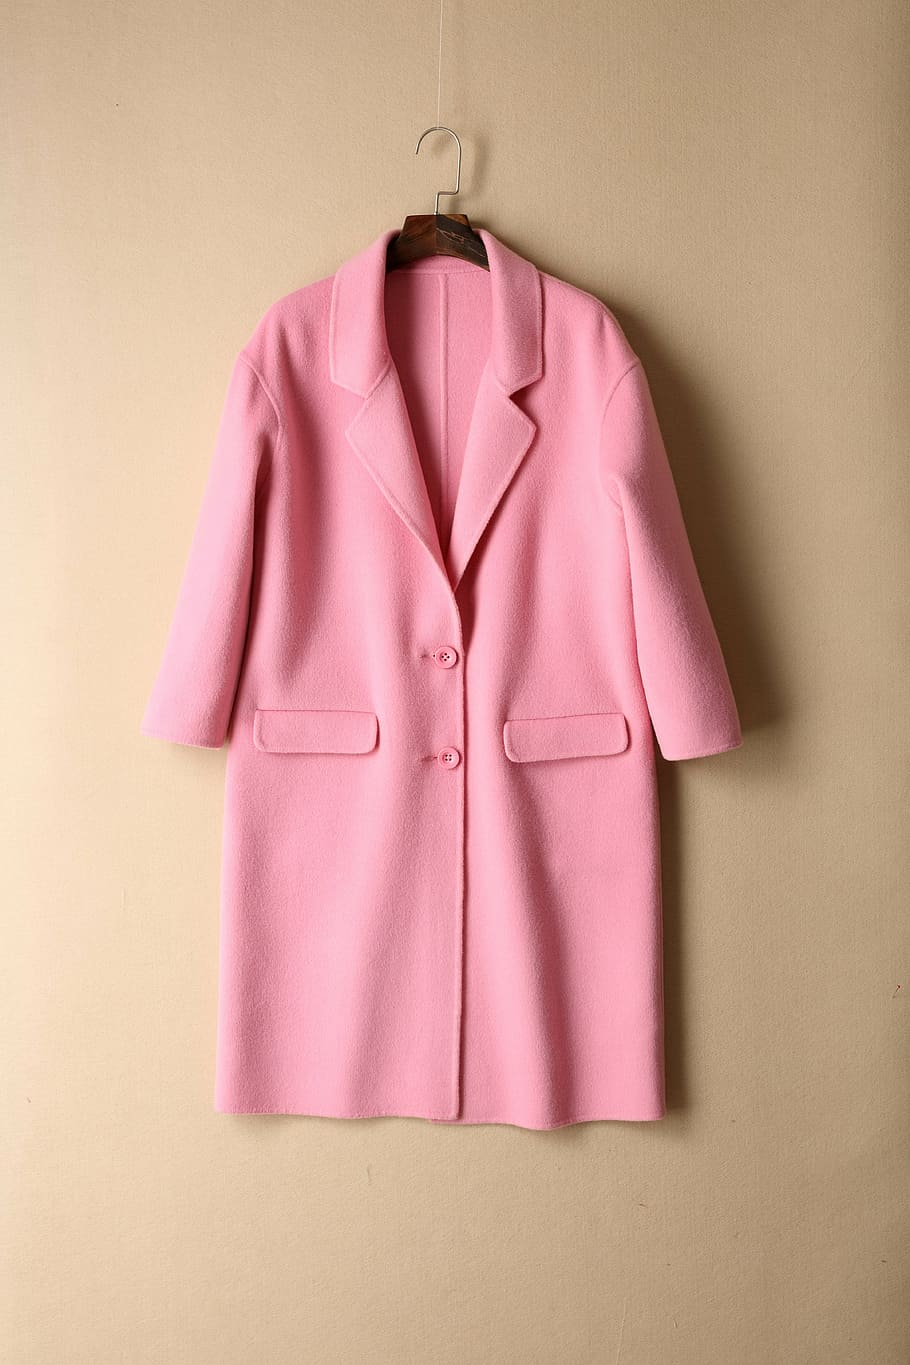 hanging pink coat on hanger, clothing, loading, figure, fashion